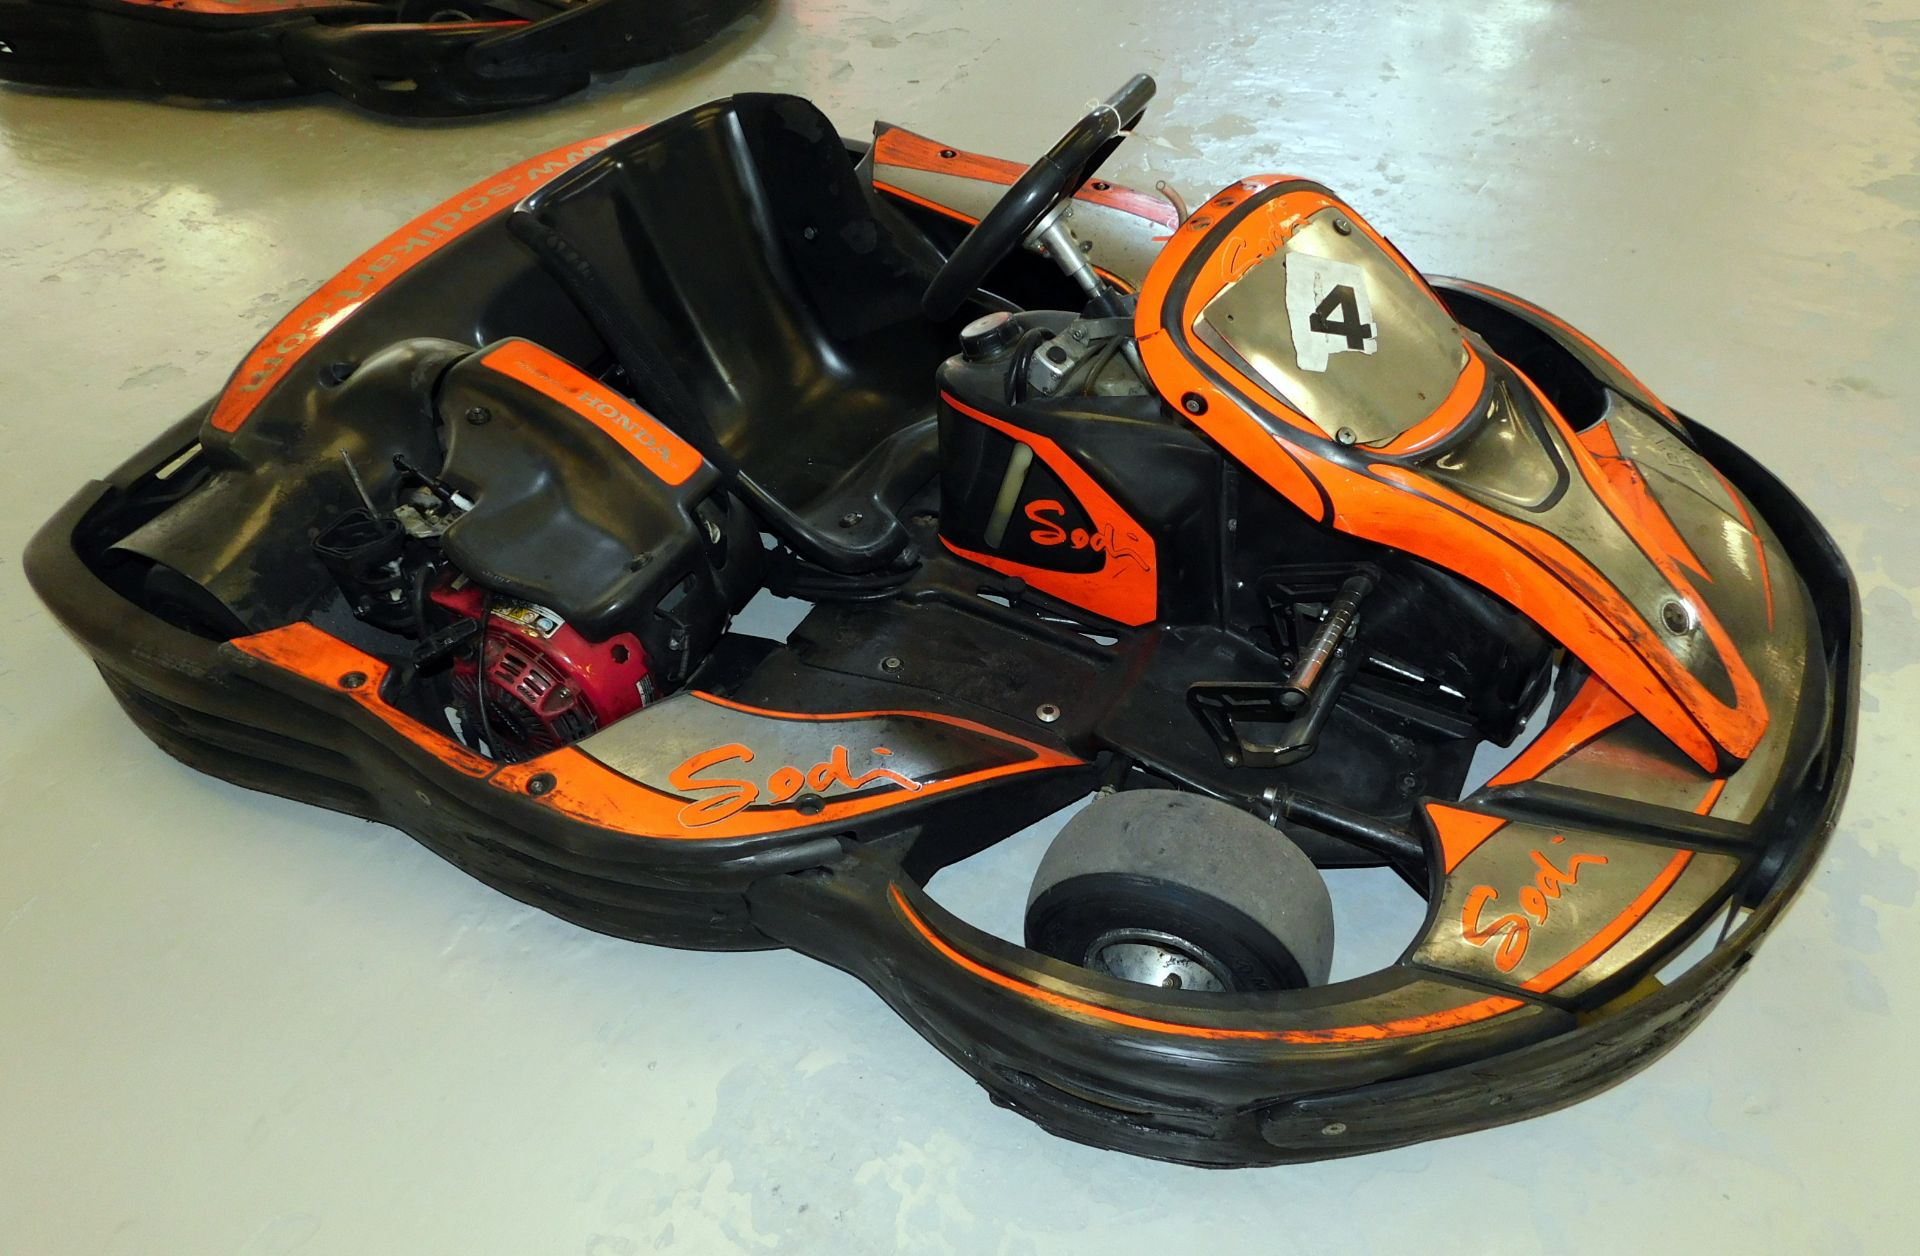 Sodi RX7 Petrol Powered Go-Kart with Honda 5.5 GX160 Engine (located in Bredbury, collection